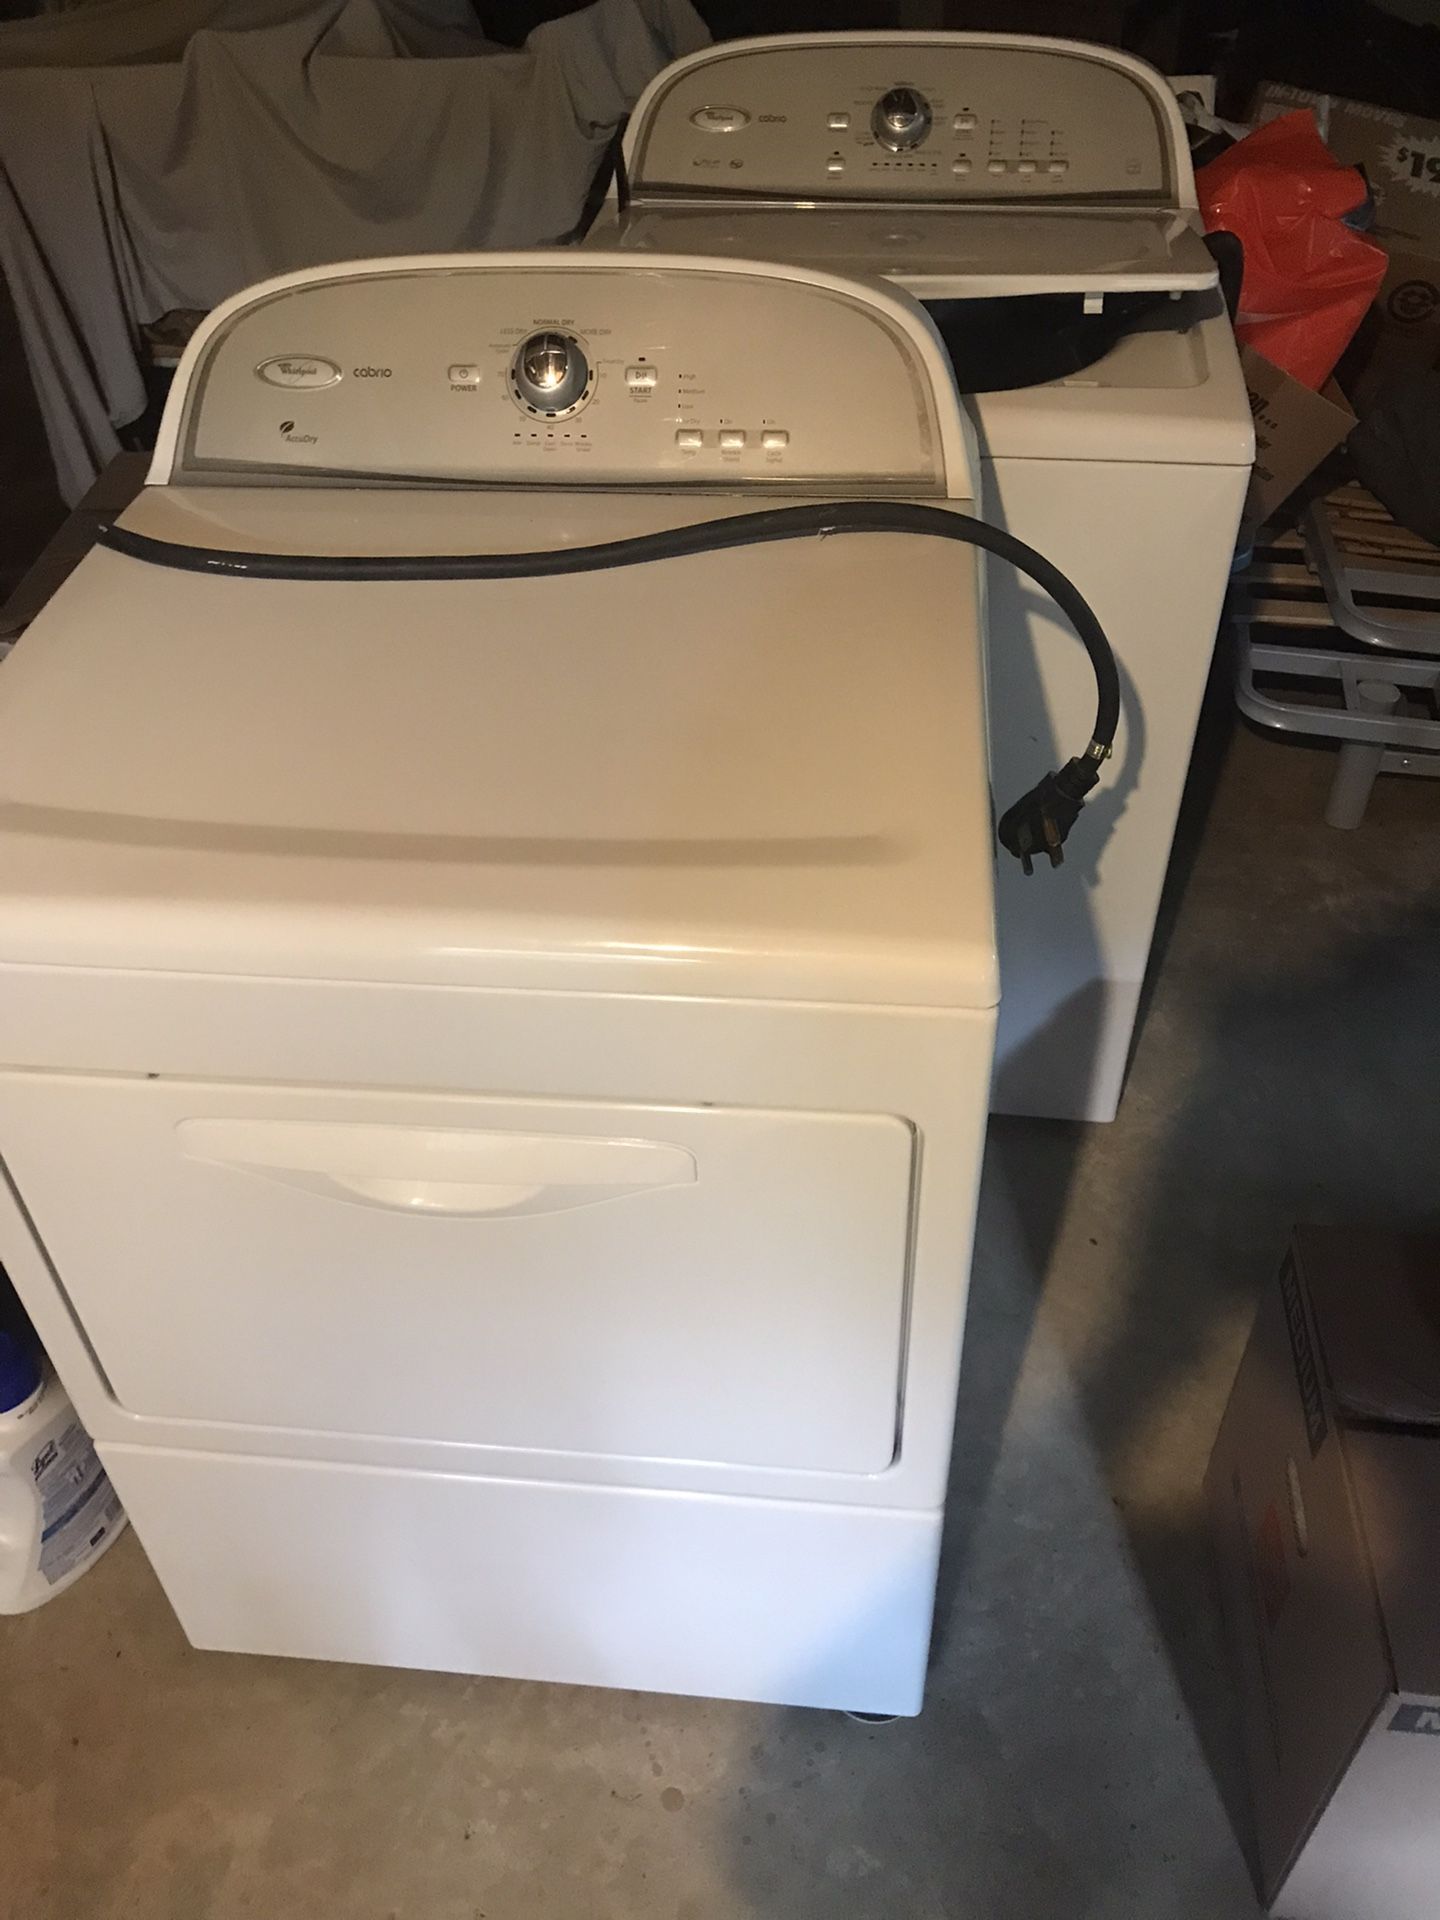 Whirpool Washer+Dryer Set